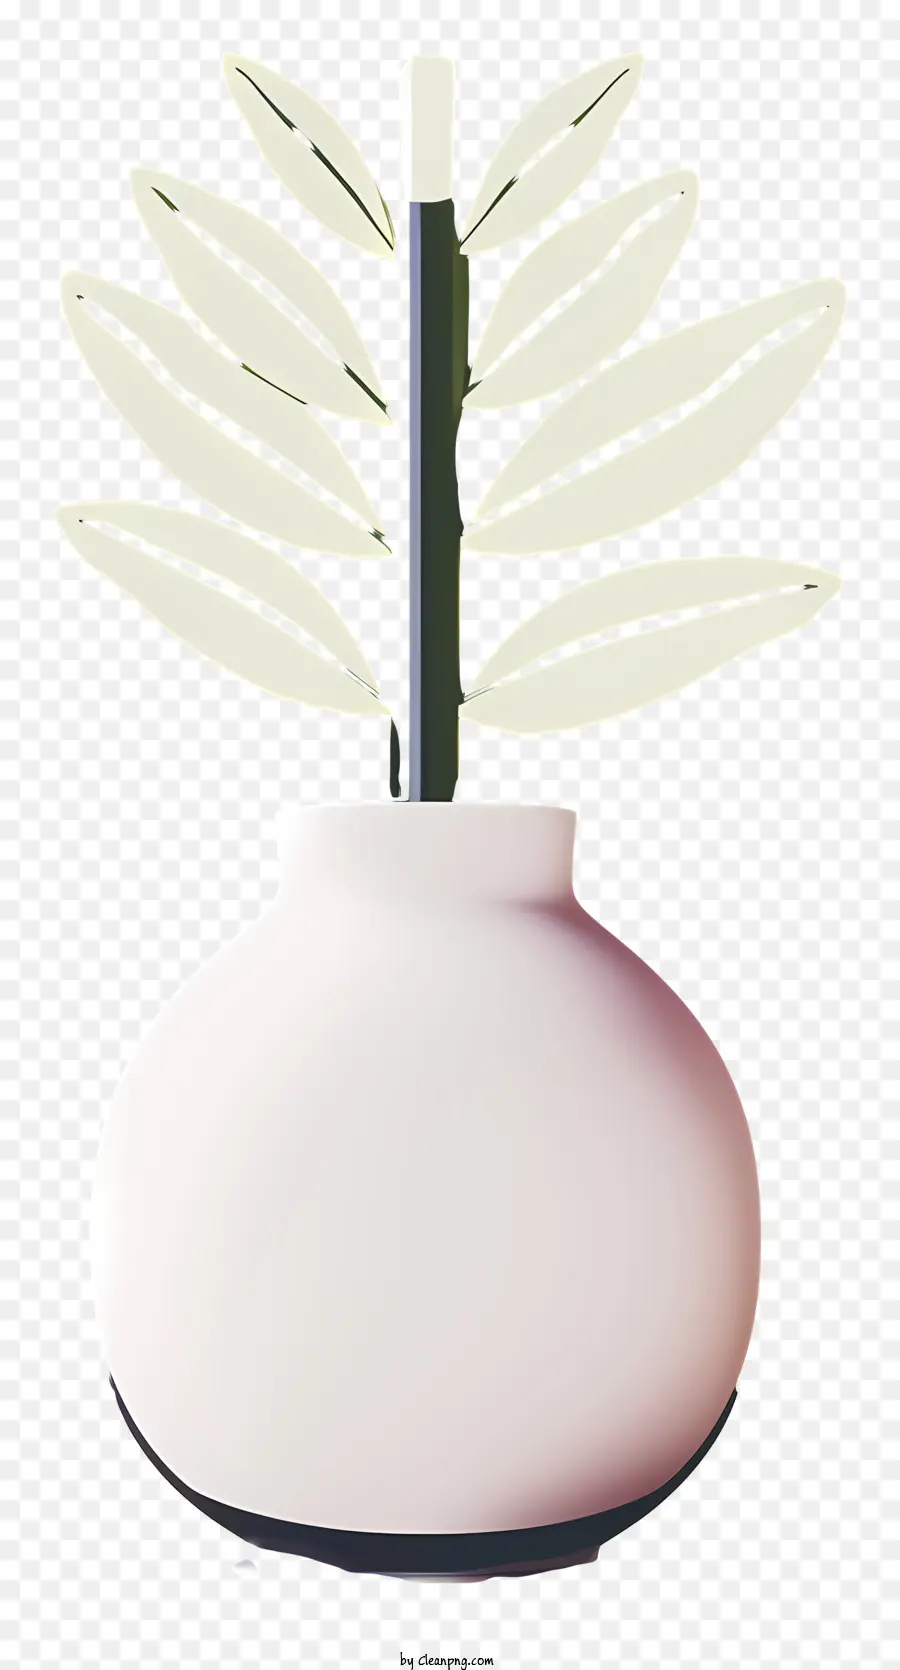 vase potted plant white vase black surface plant growth